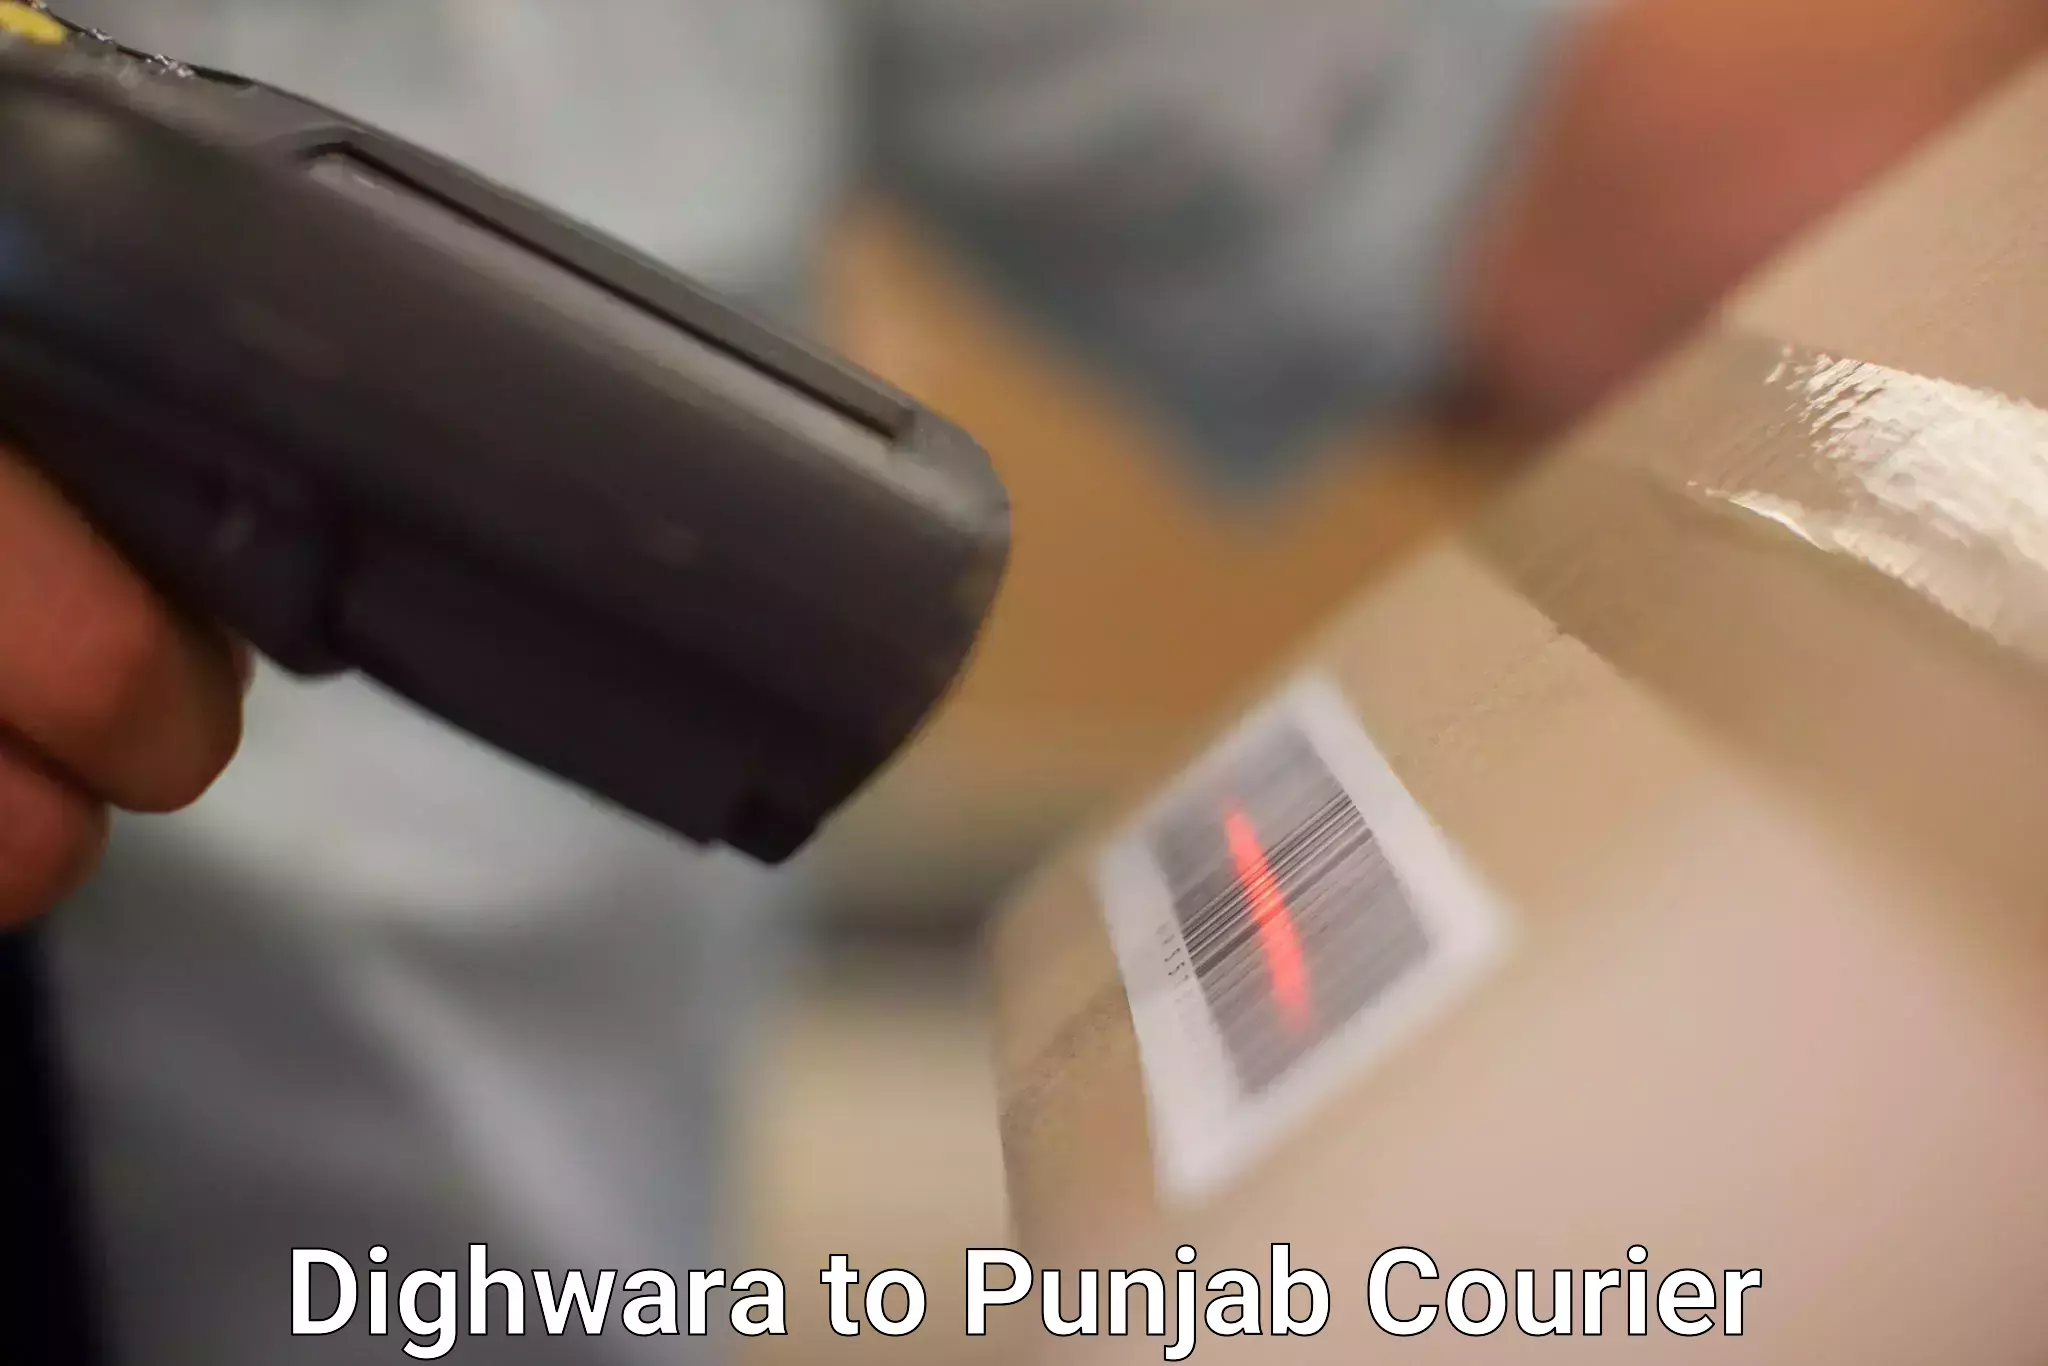 Express delivery network Dighwara to Punjab